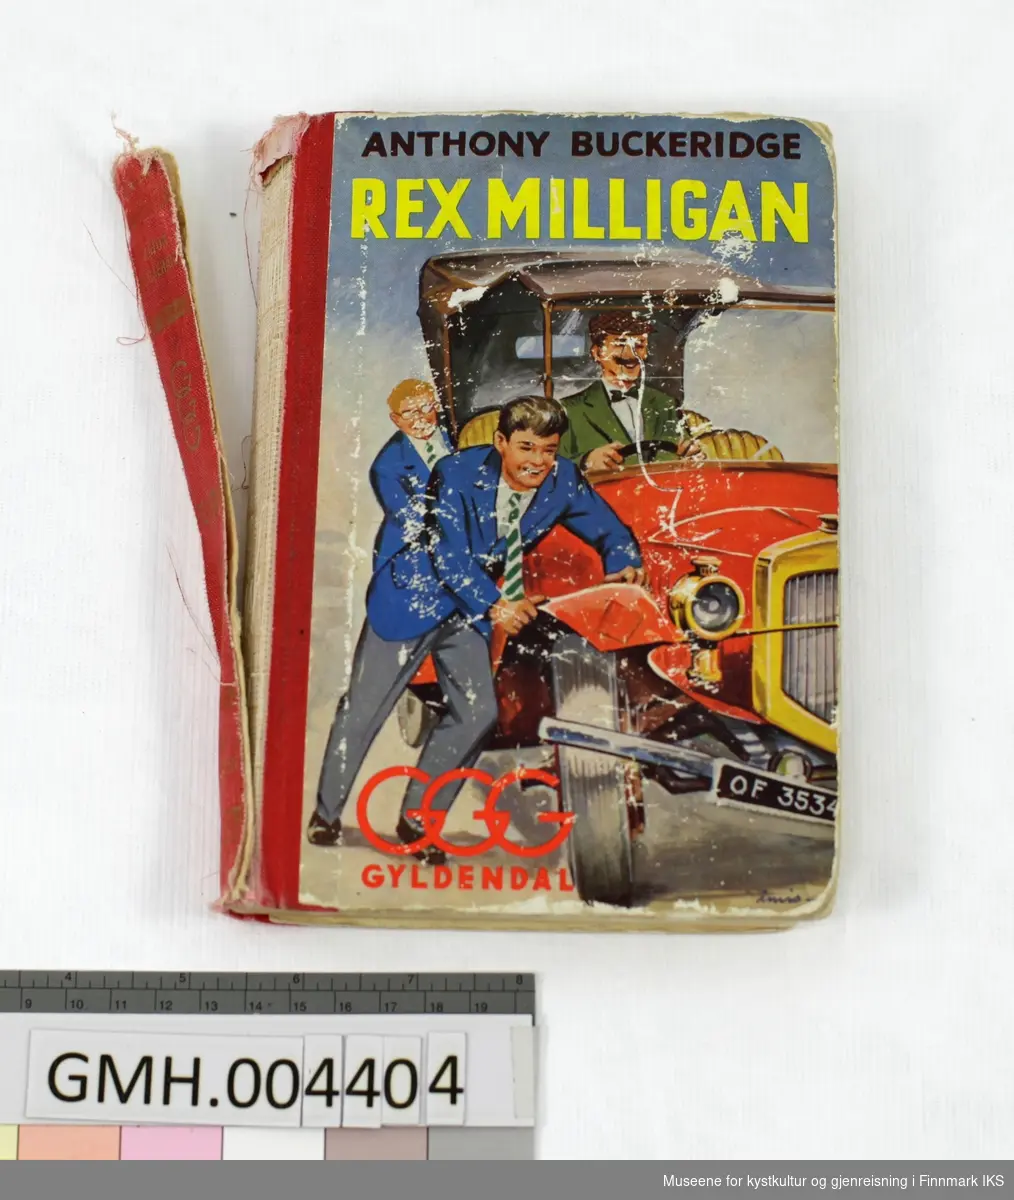 Bok: Anthony Buckeridge. Rex Milligan. Gyldendal, Oslo, 1958.